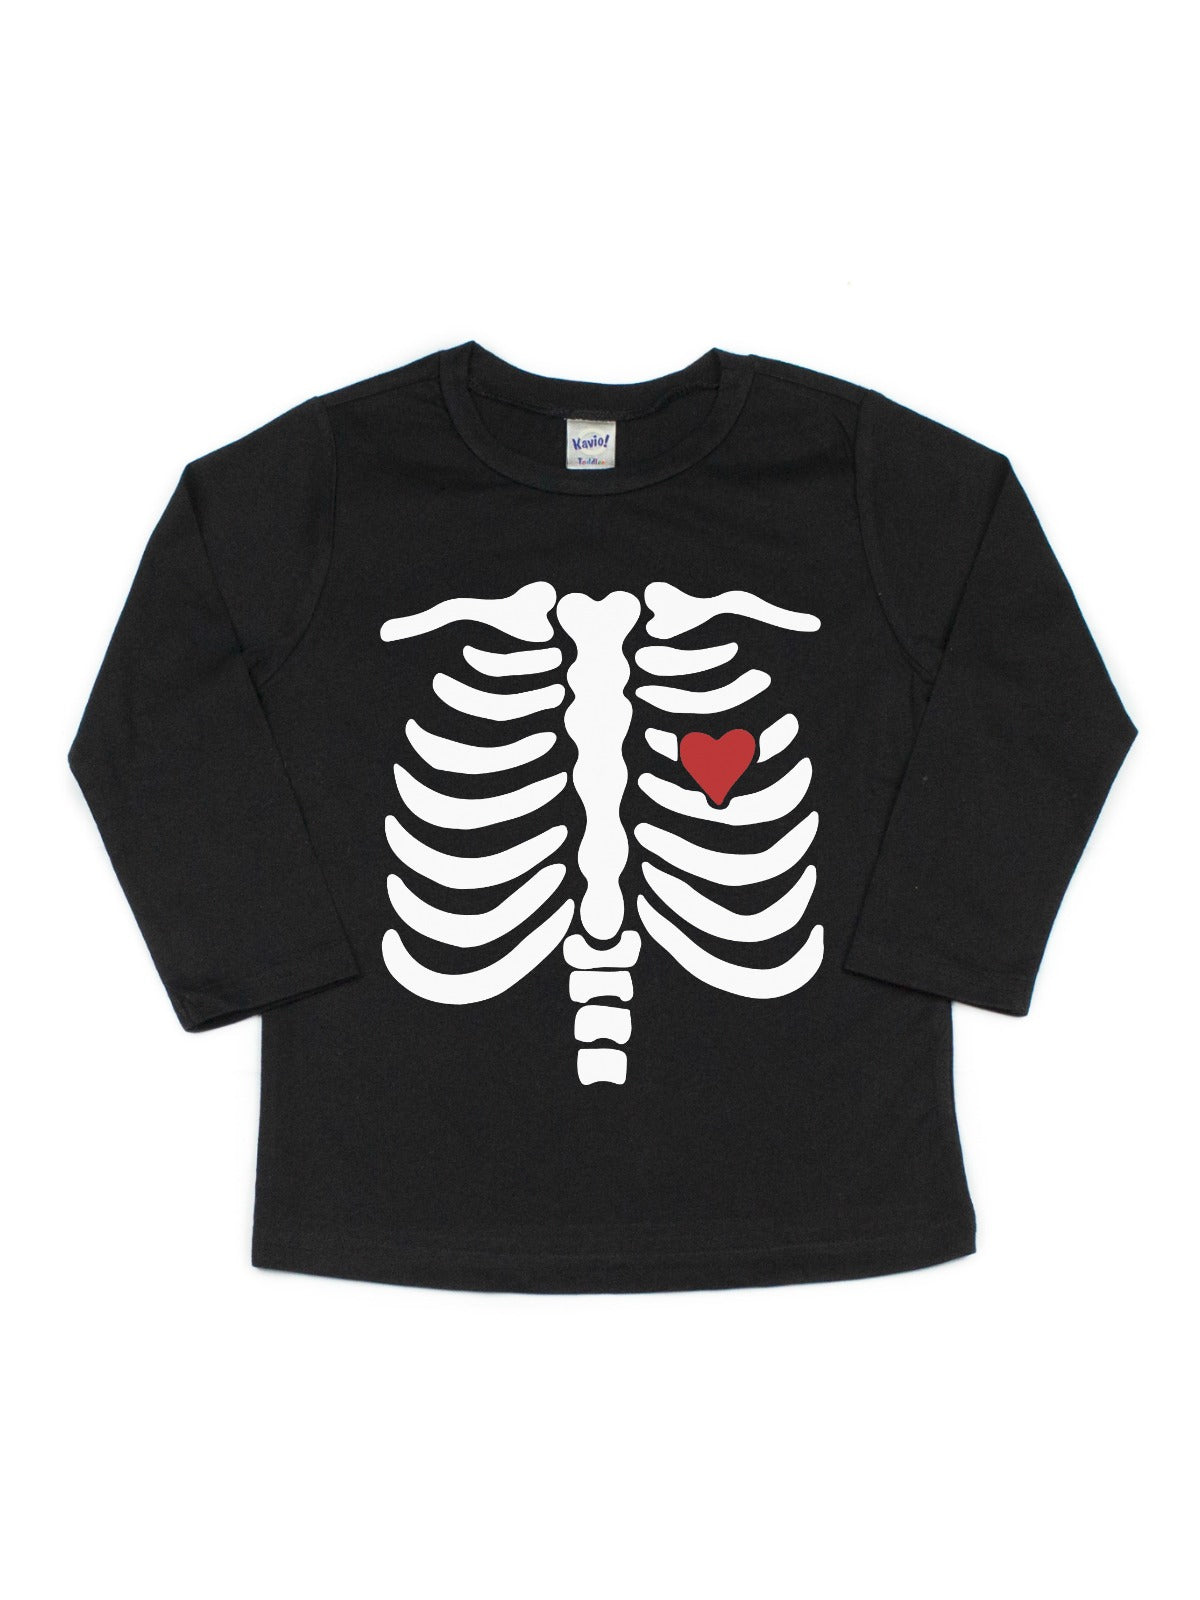 girls skeleton with heart shirt